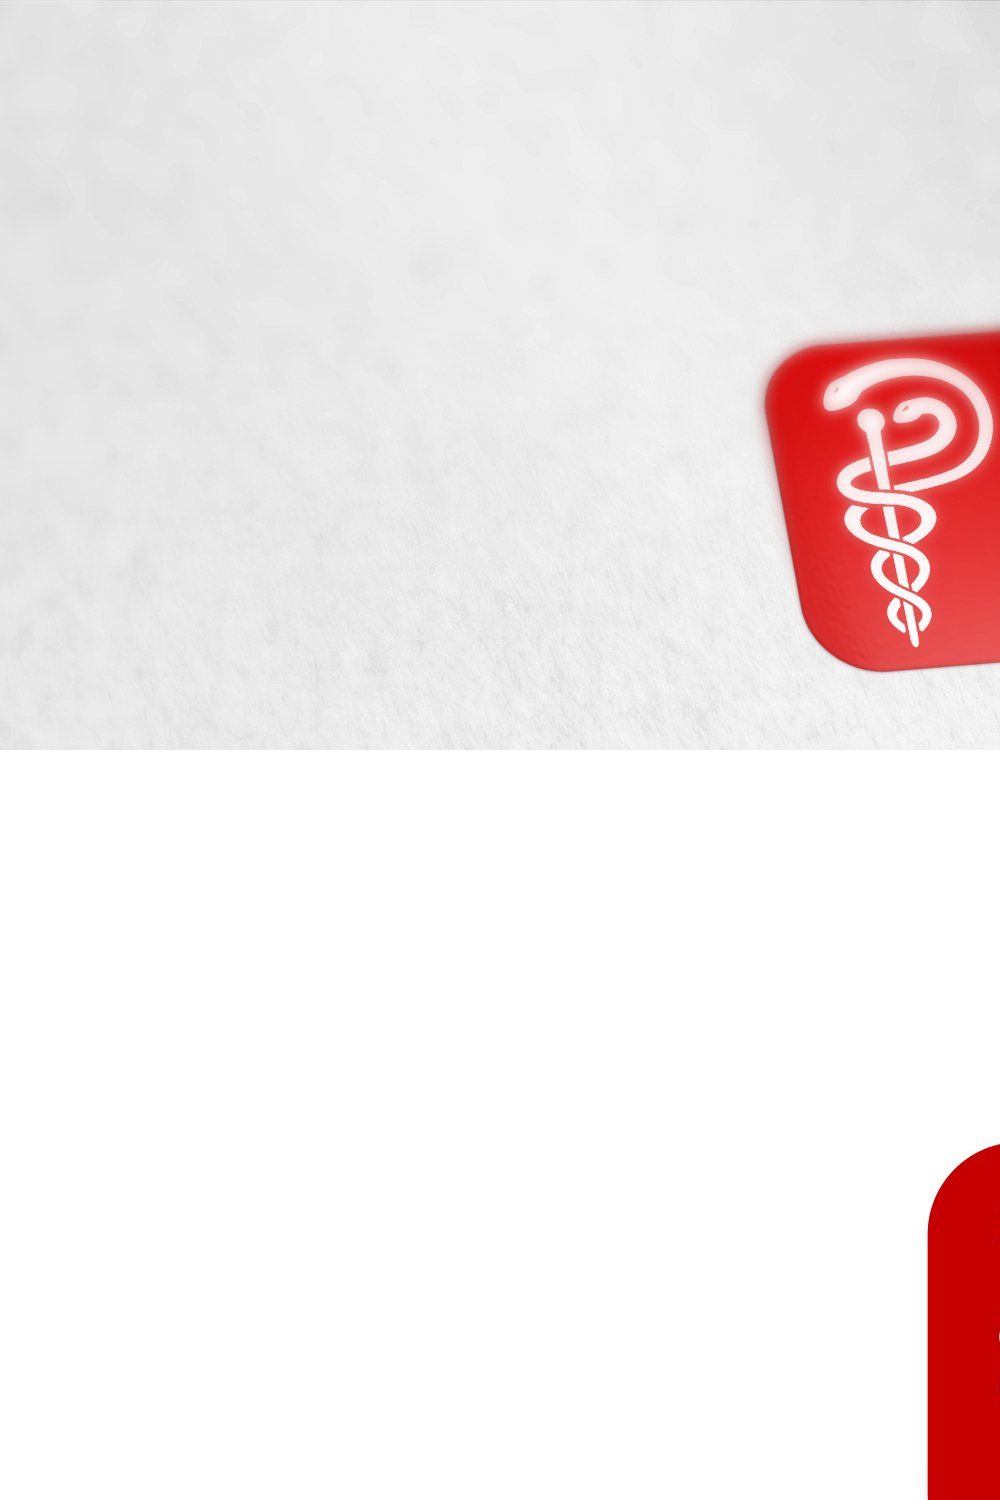 P Medical logo pinterest preview image.